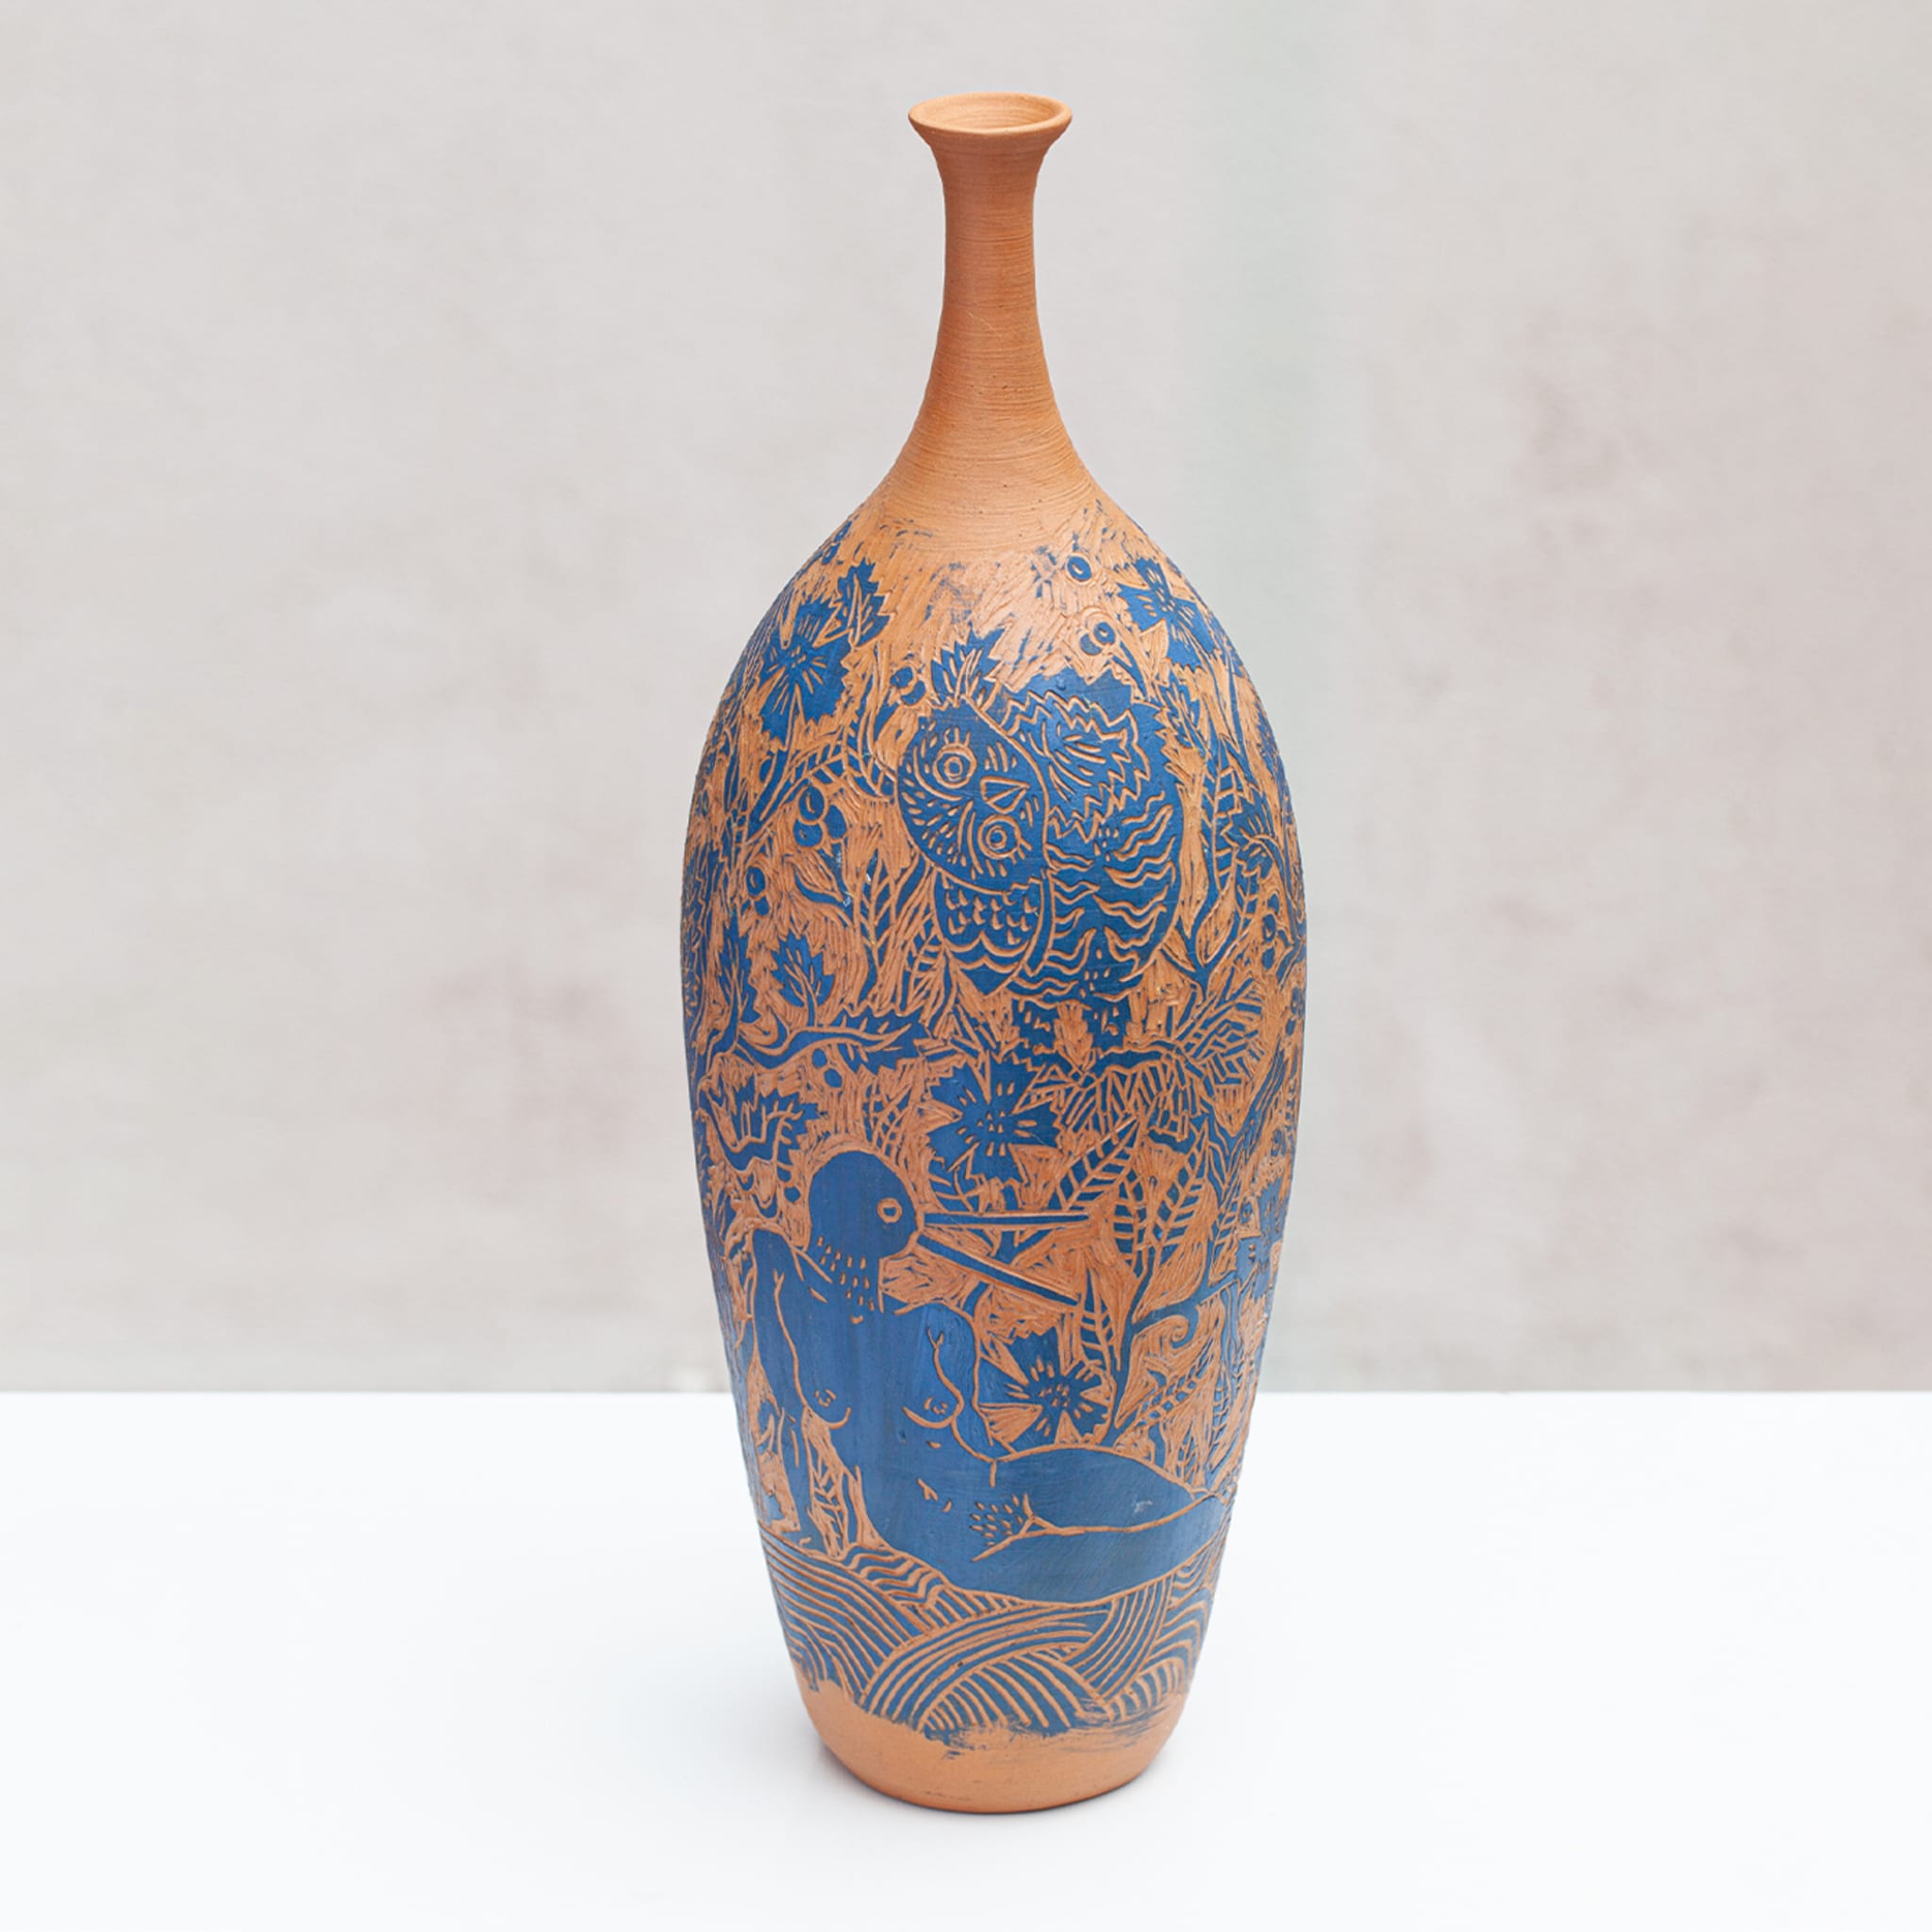 Aironi Heron Vase by Clara Holt and Chiara Zoppei - Alternative view 3